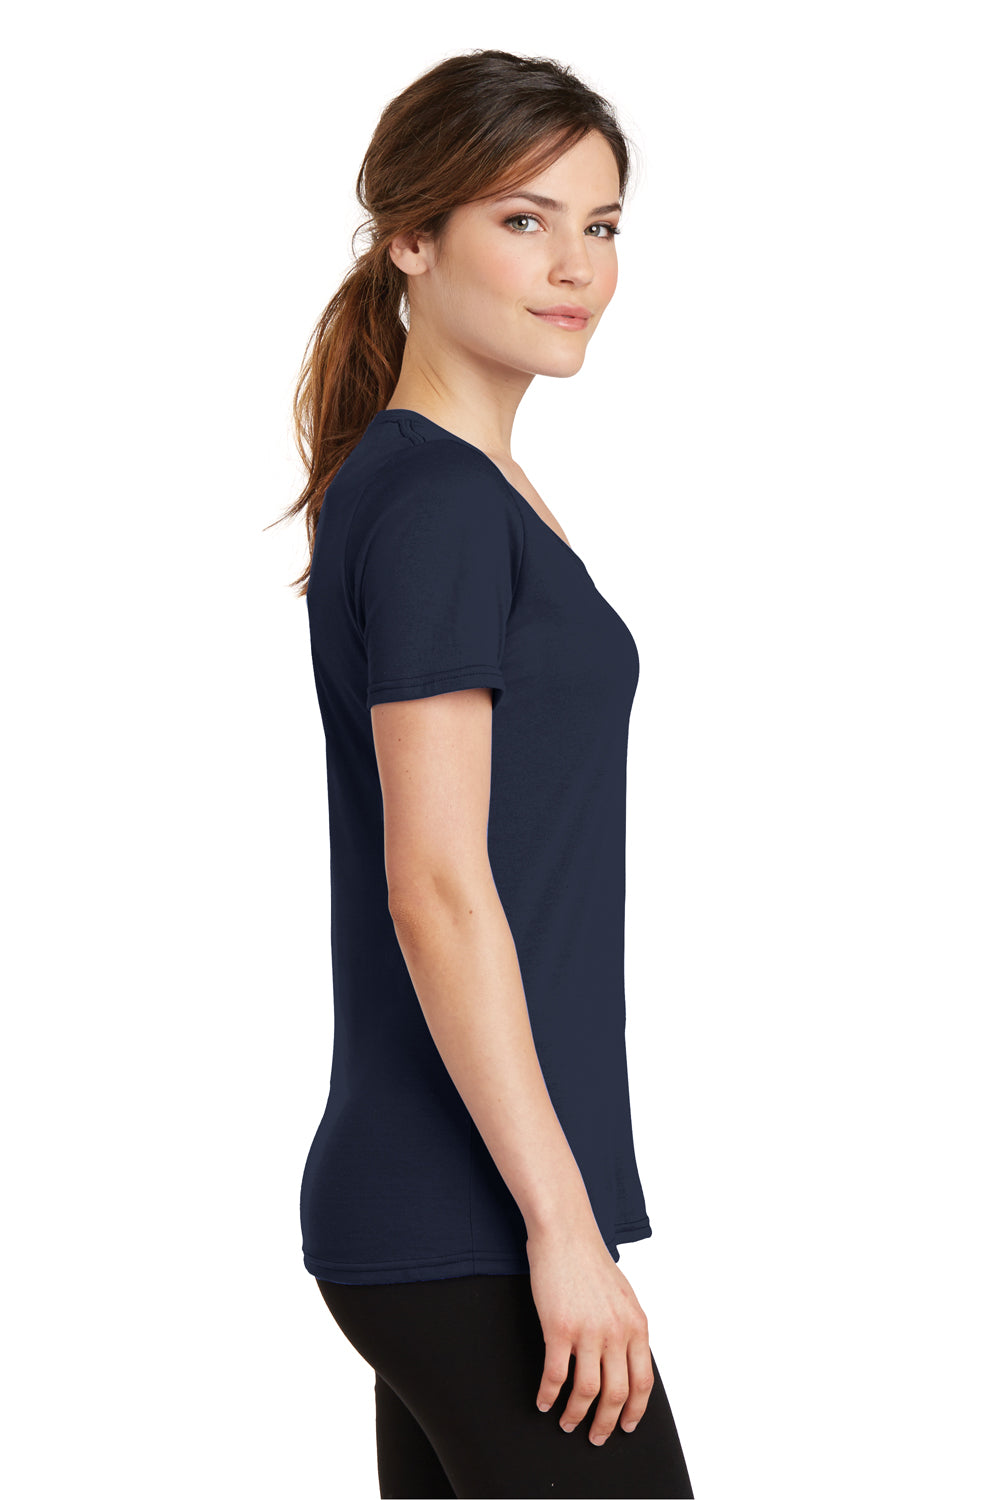 Port & Company LPC381V Womens Dry Zone Performance Moisture Wicking Short Sleeve V-Neck T-Shirt Navy Blue Side